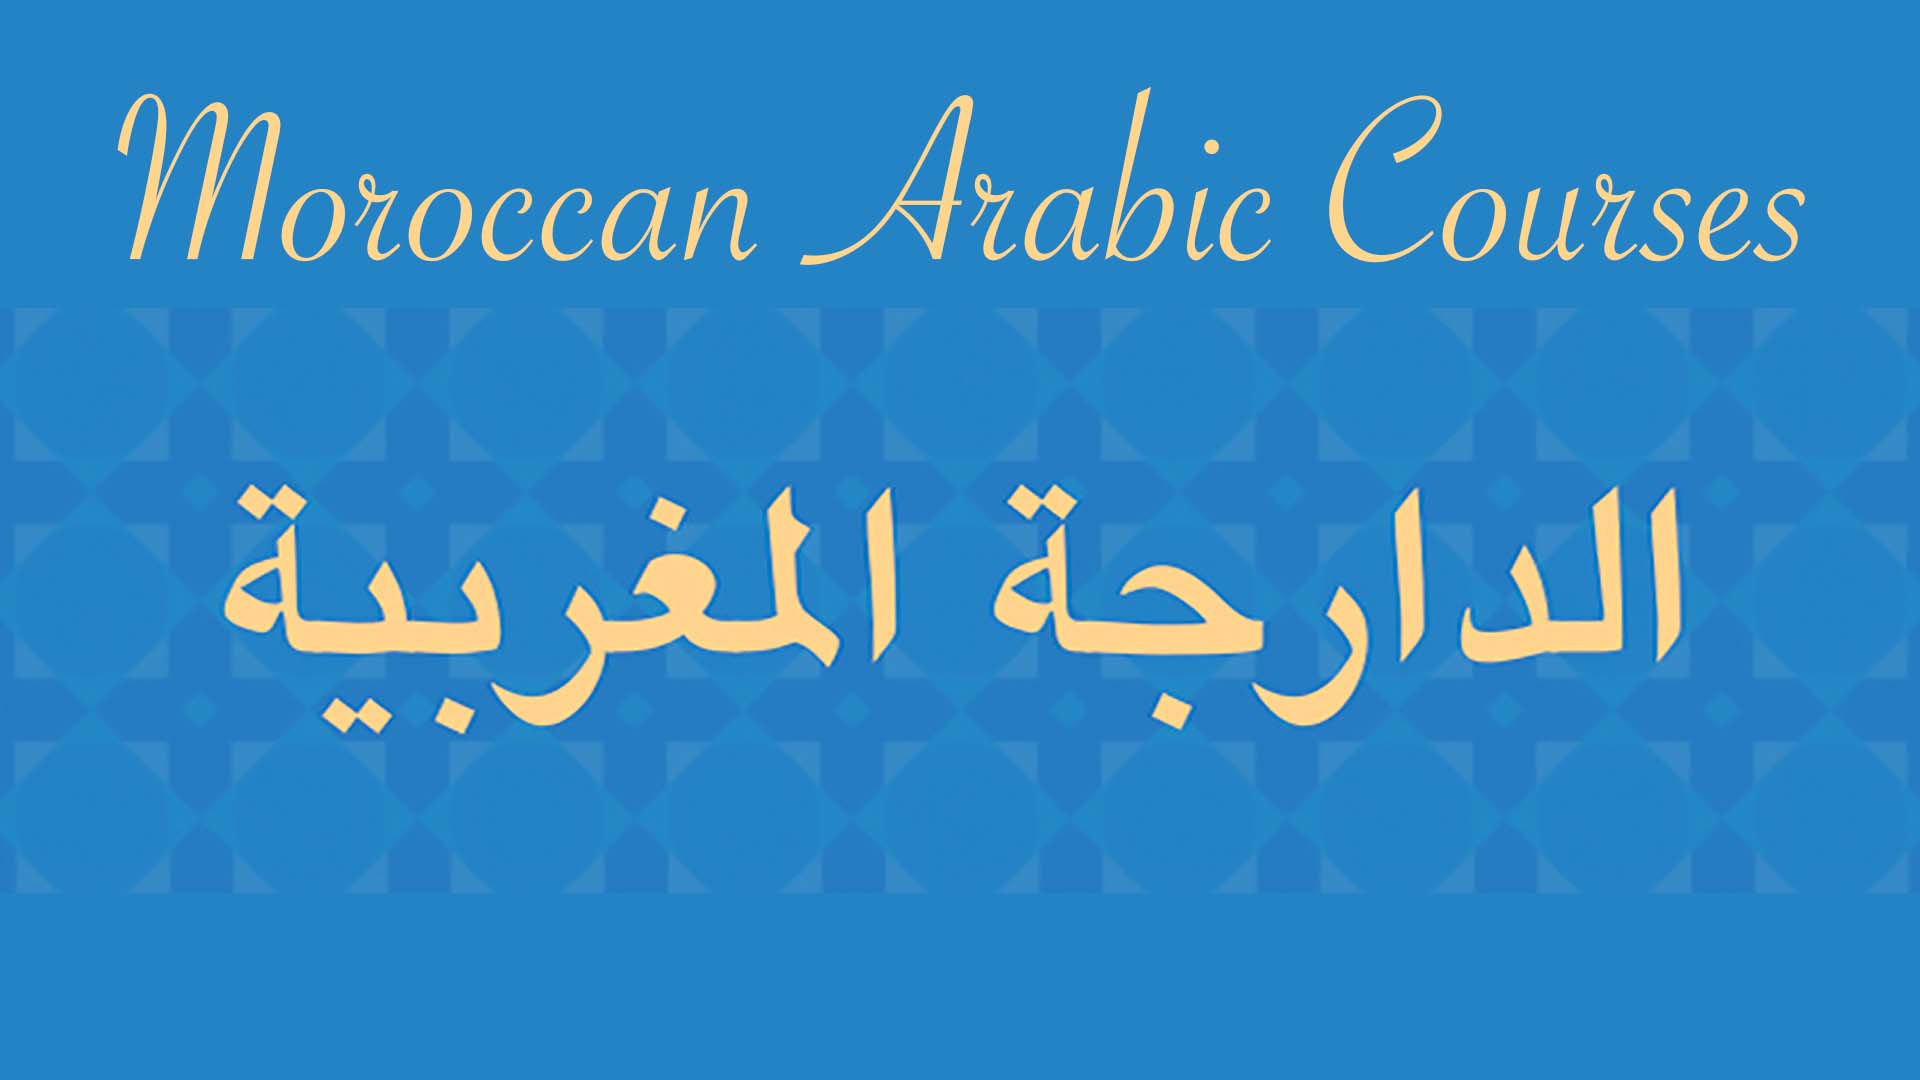 Moroccan Arabic Courses